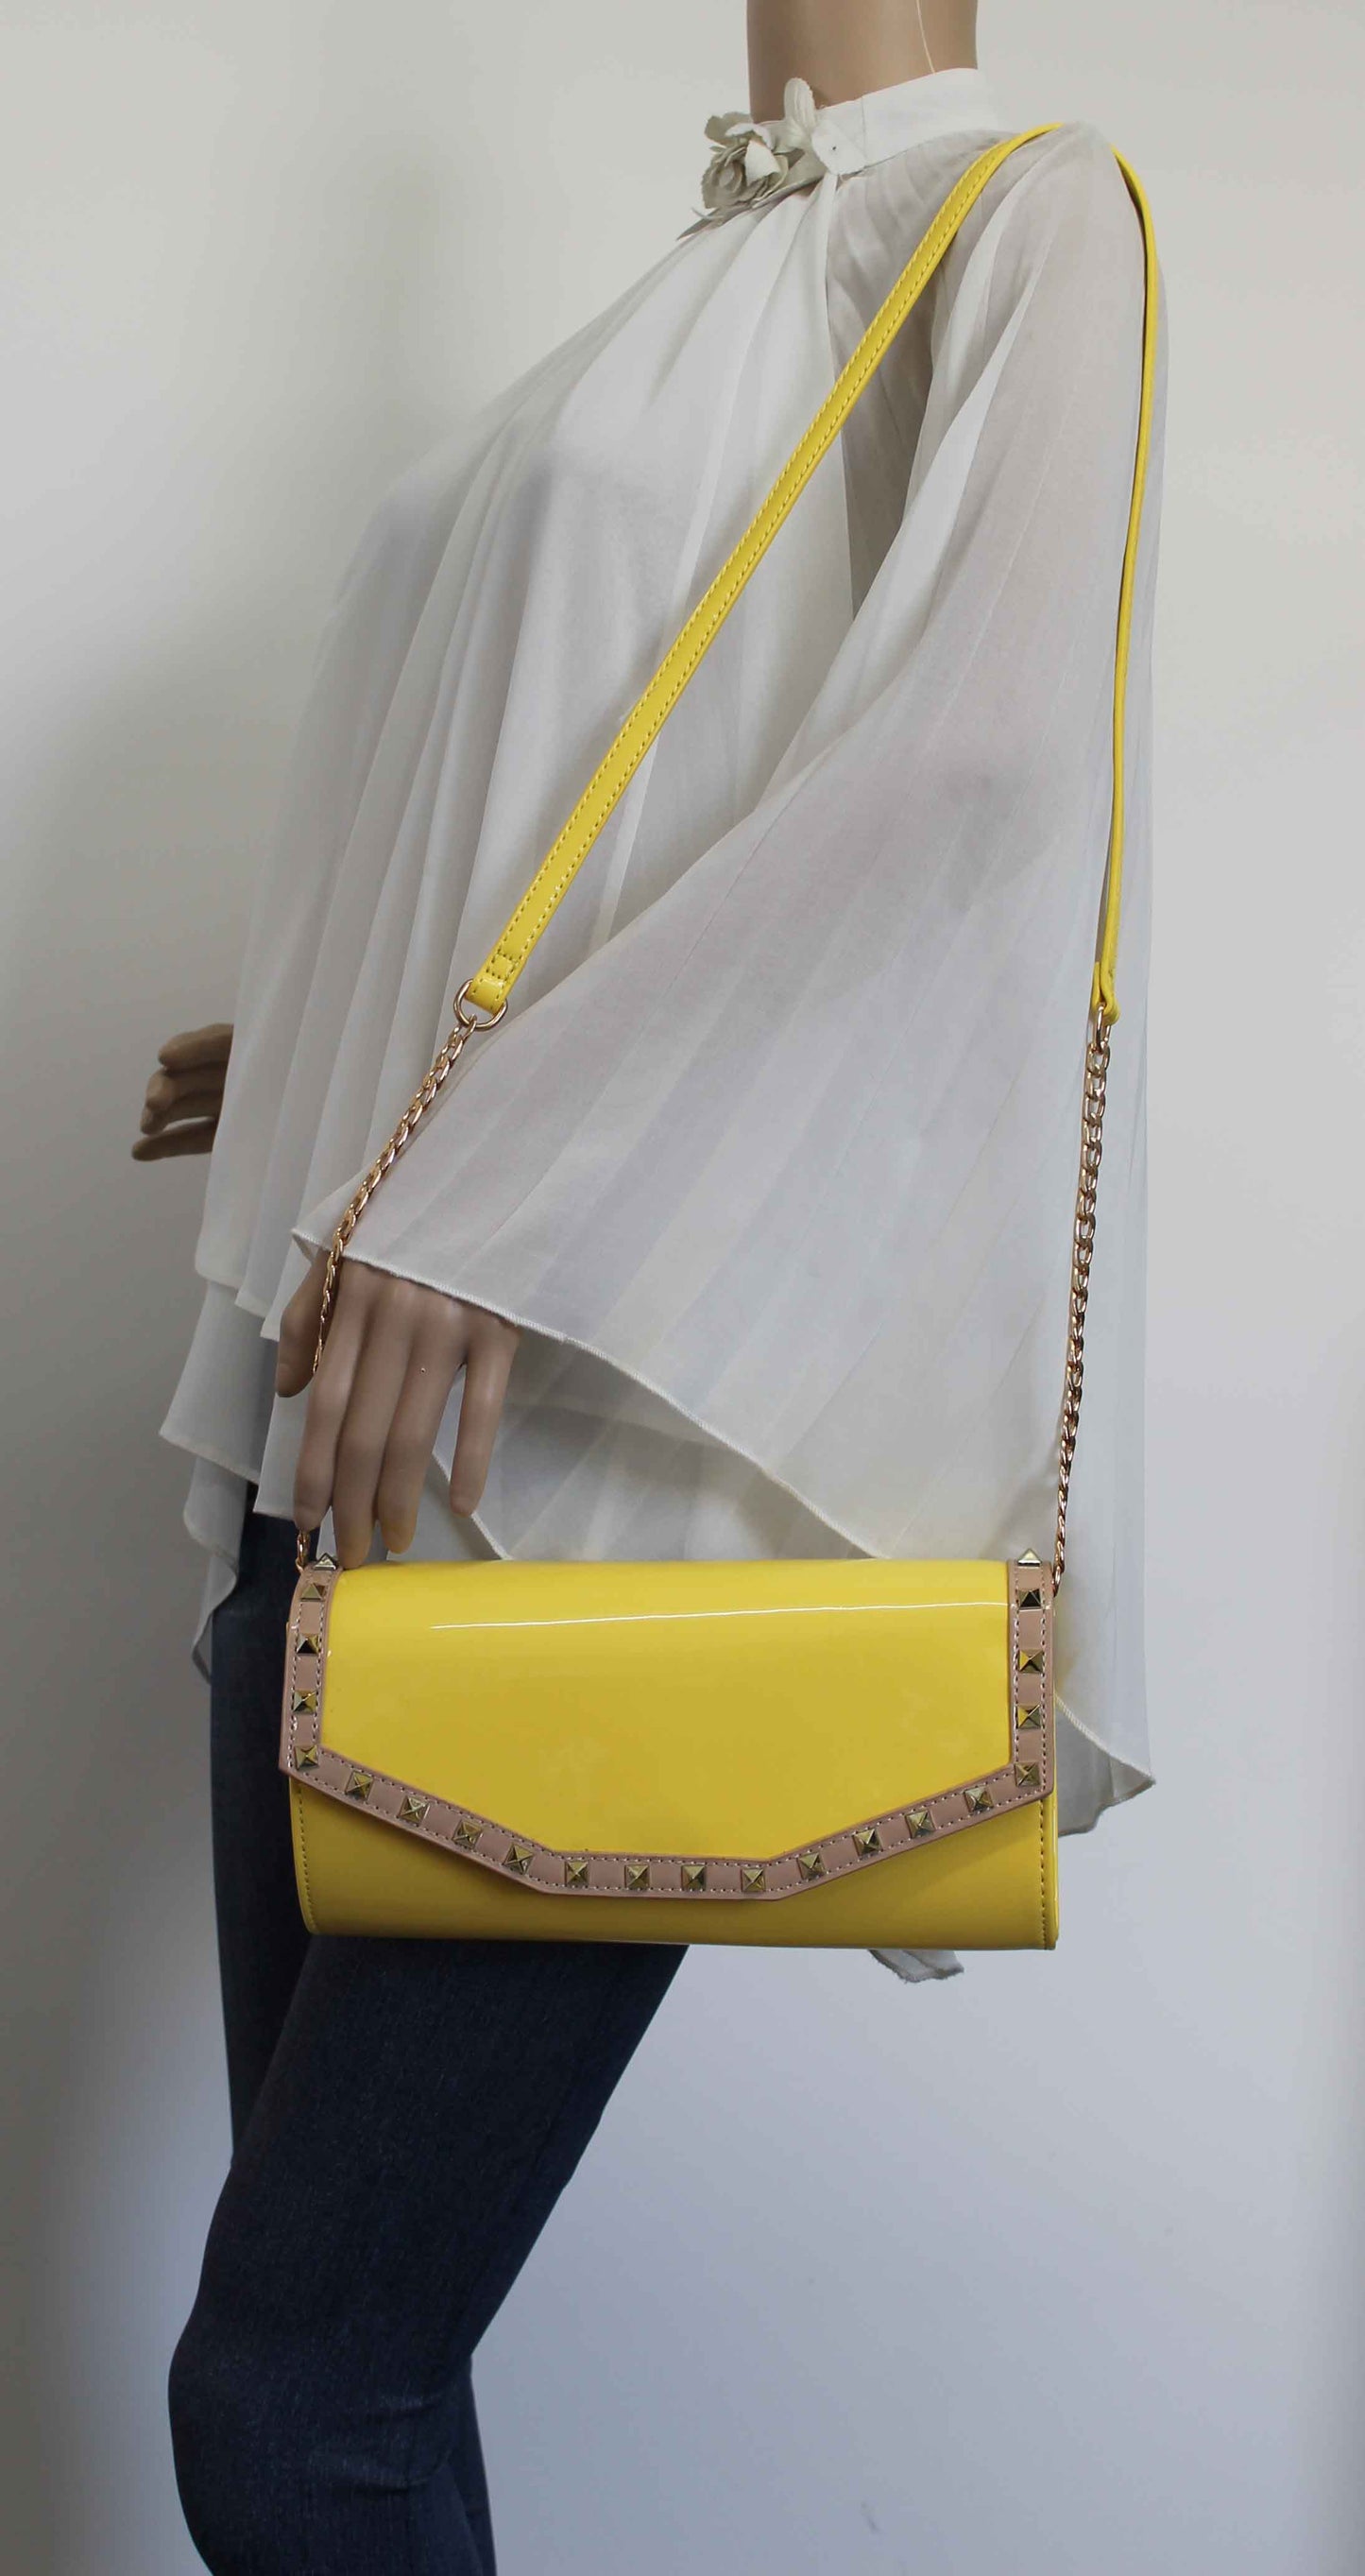 SWANKYSWANS Juno Clutch Bag Yellow Cute Cheap Clutch Bag For Weddings School and Work